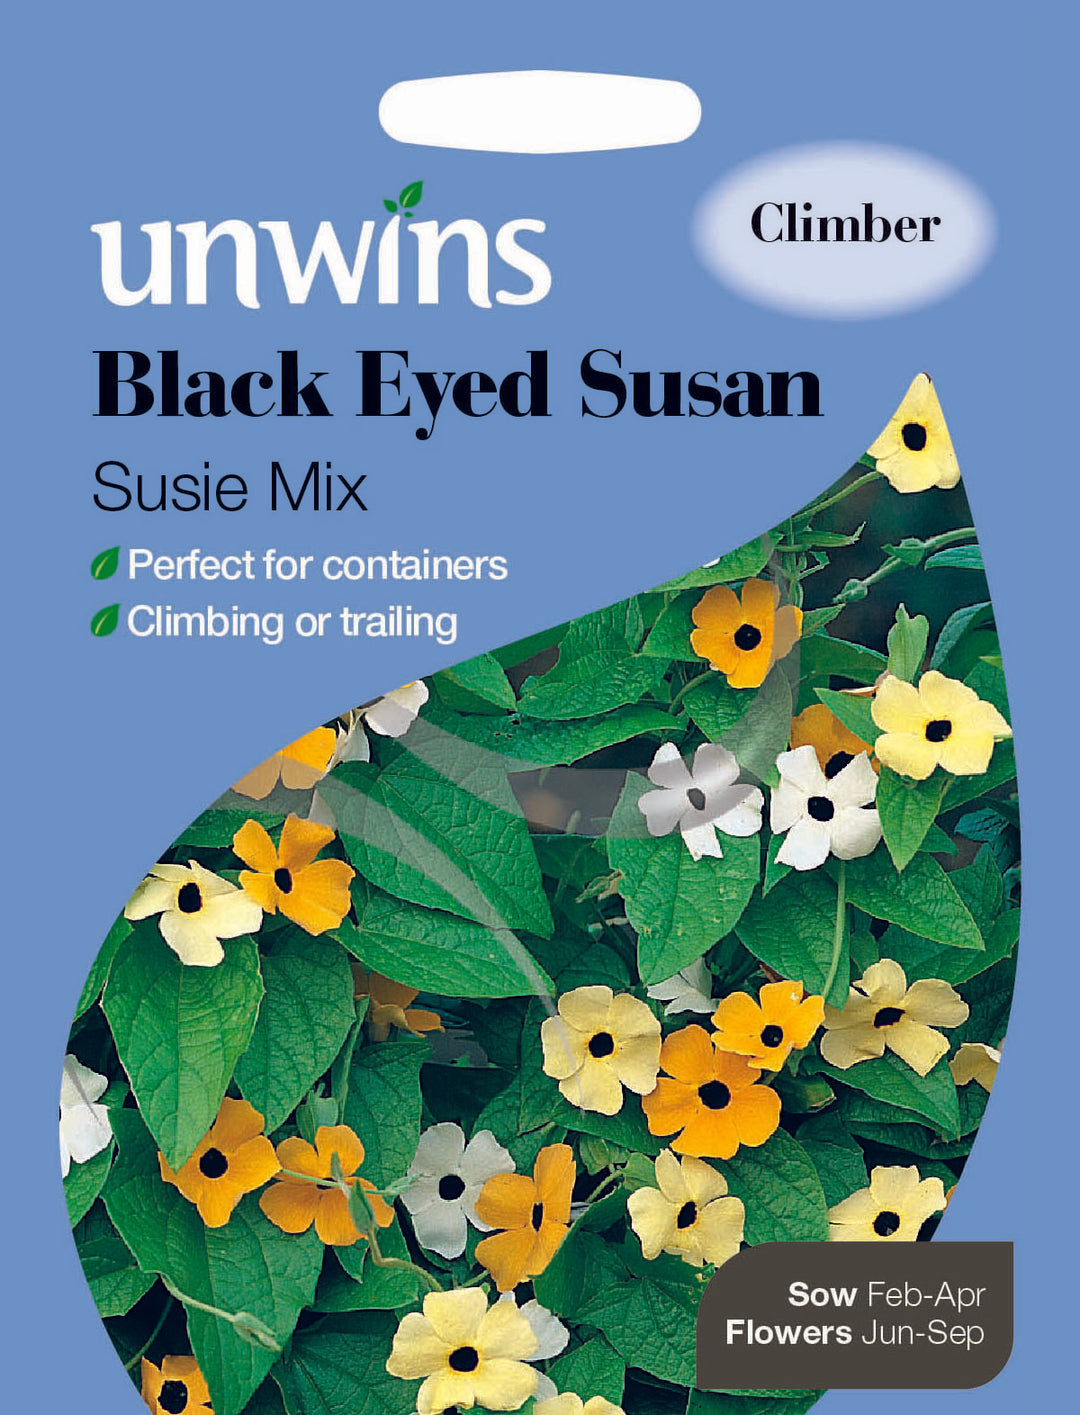 Black Eyed Susan Susie Mix